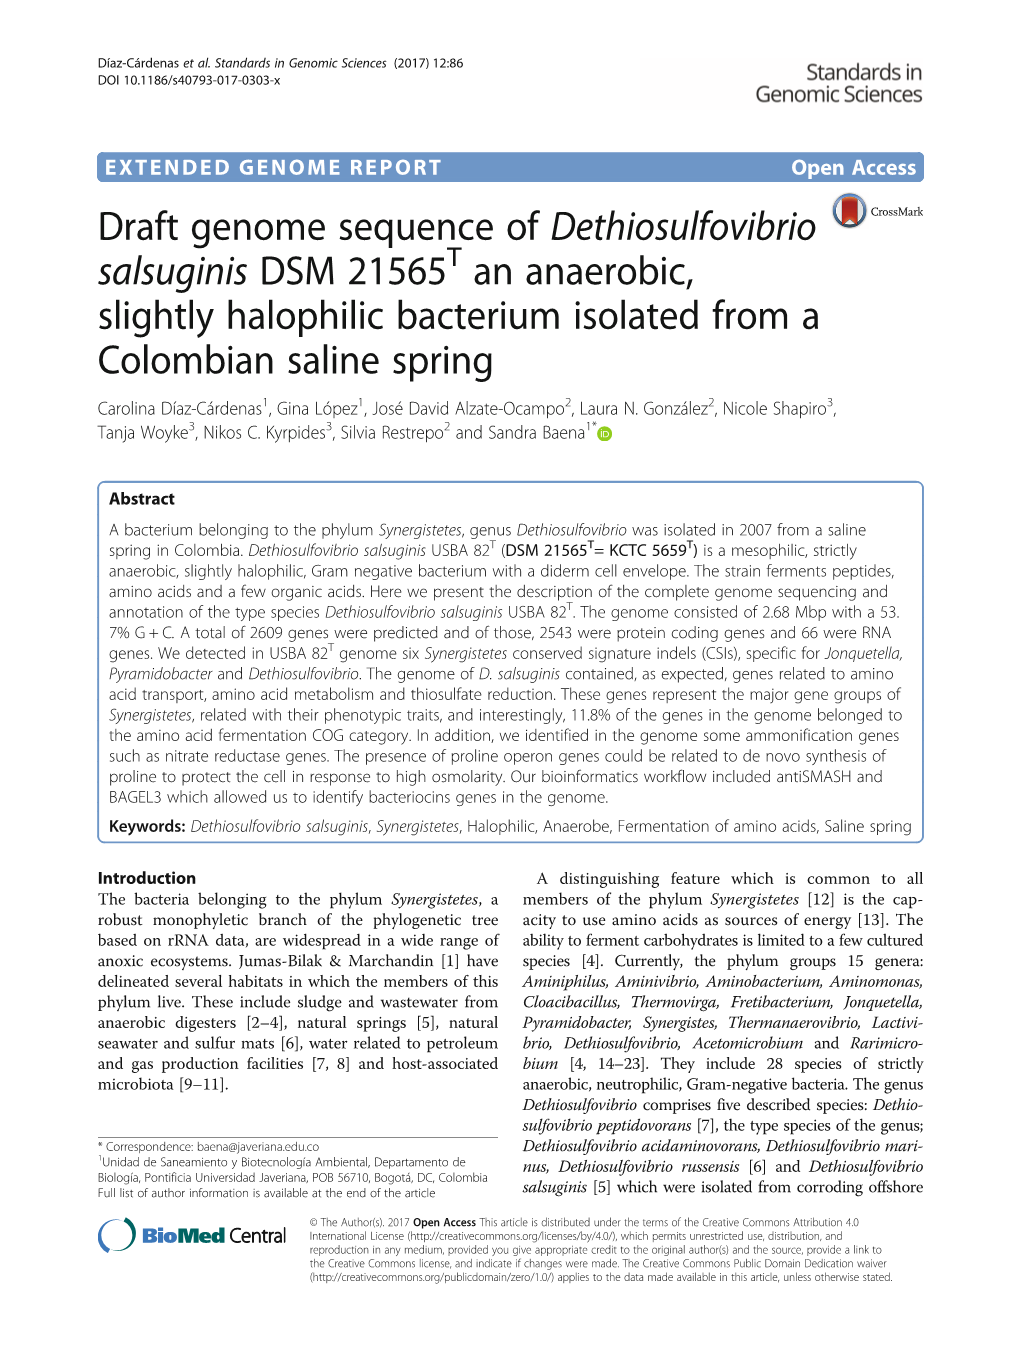 Draft Genome Sequence of Dethiosulfovibrio Salsuginis DSM